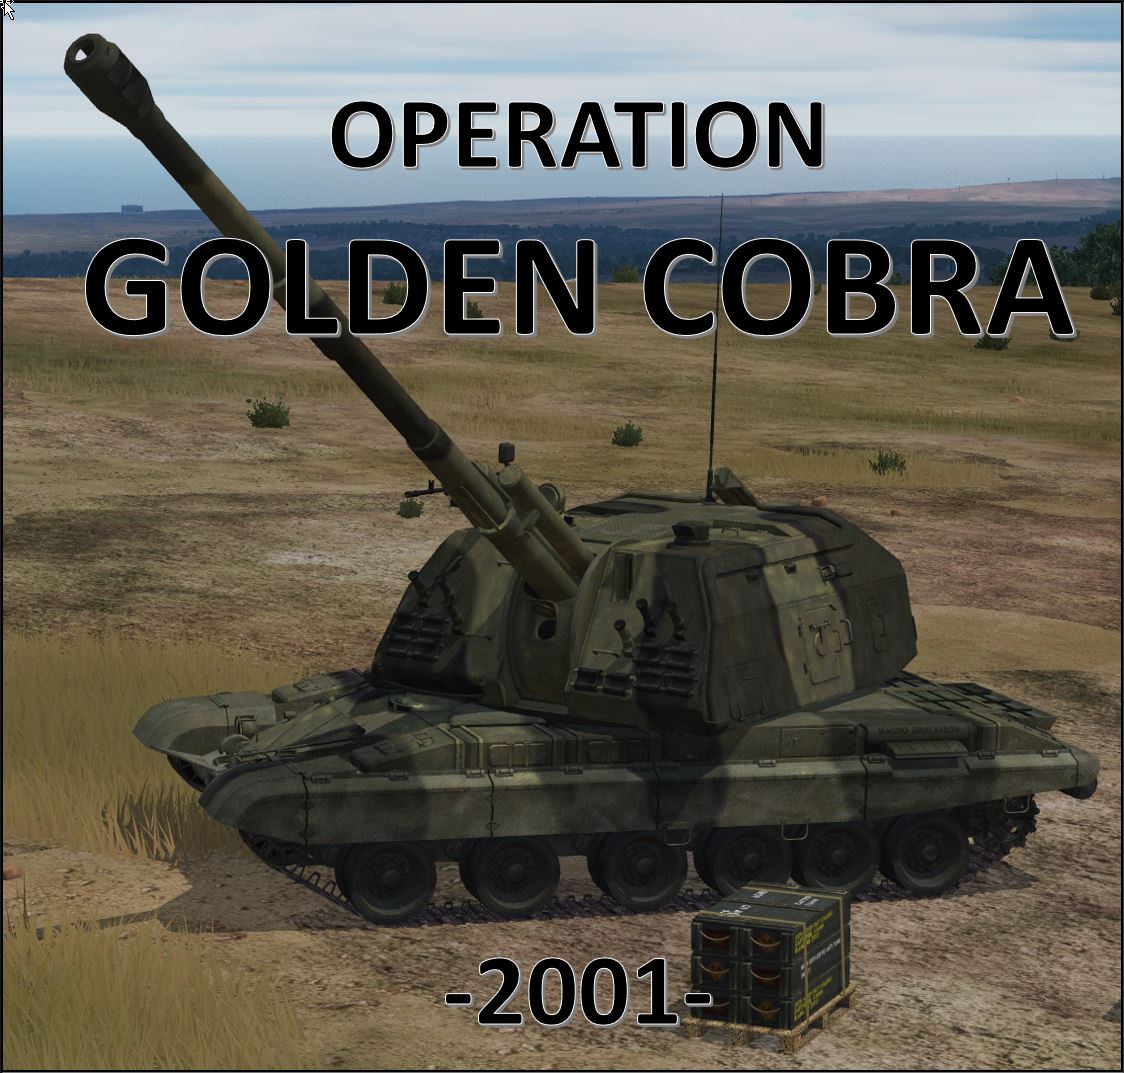 Operation "Golden Cobra" - 2001 (fictional)